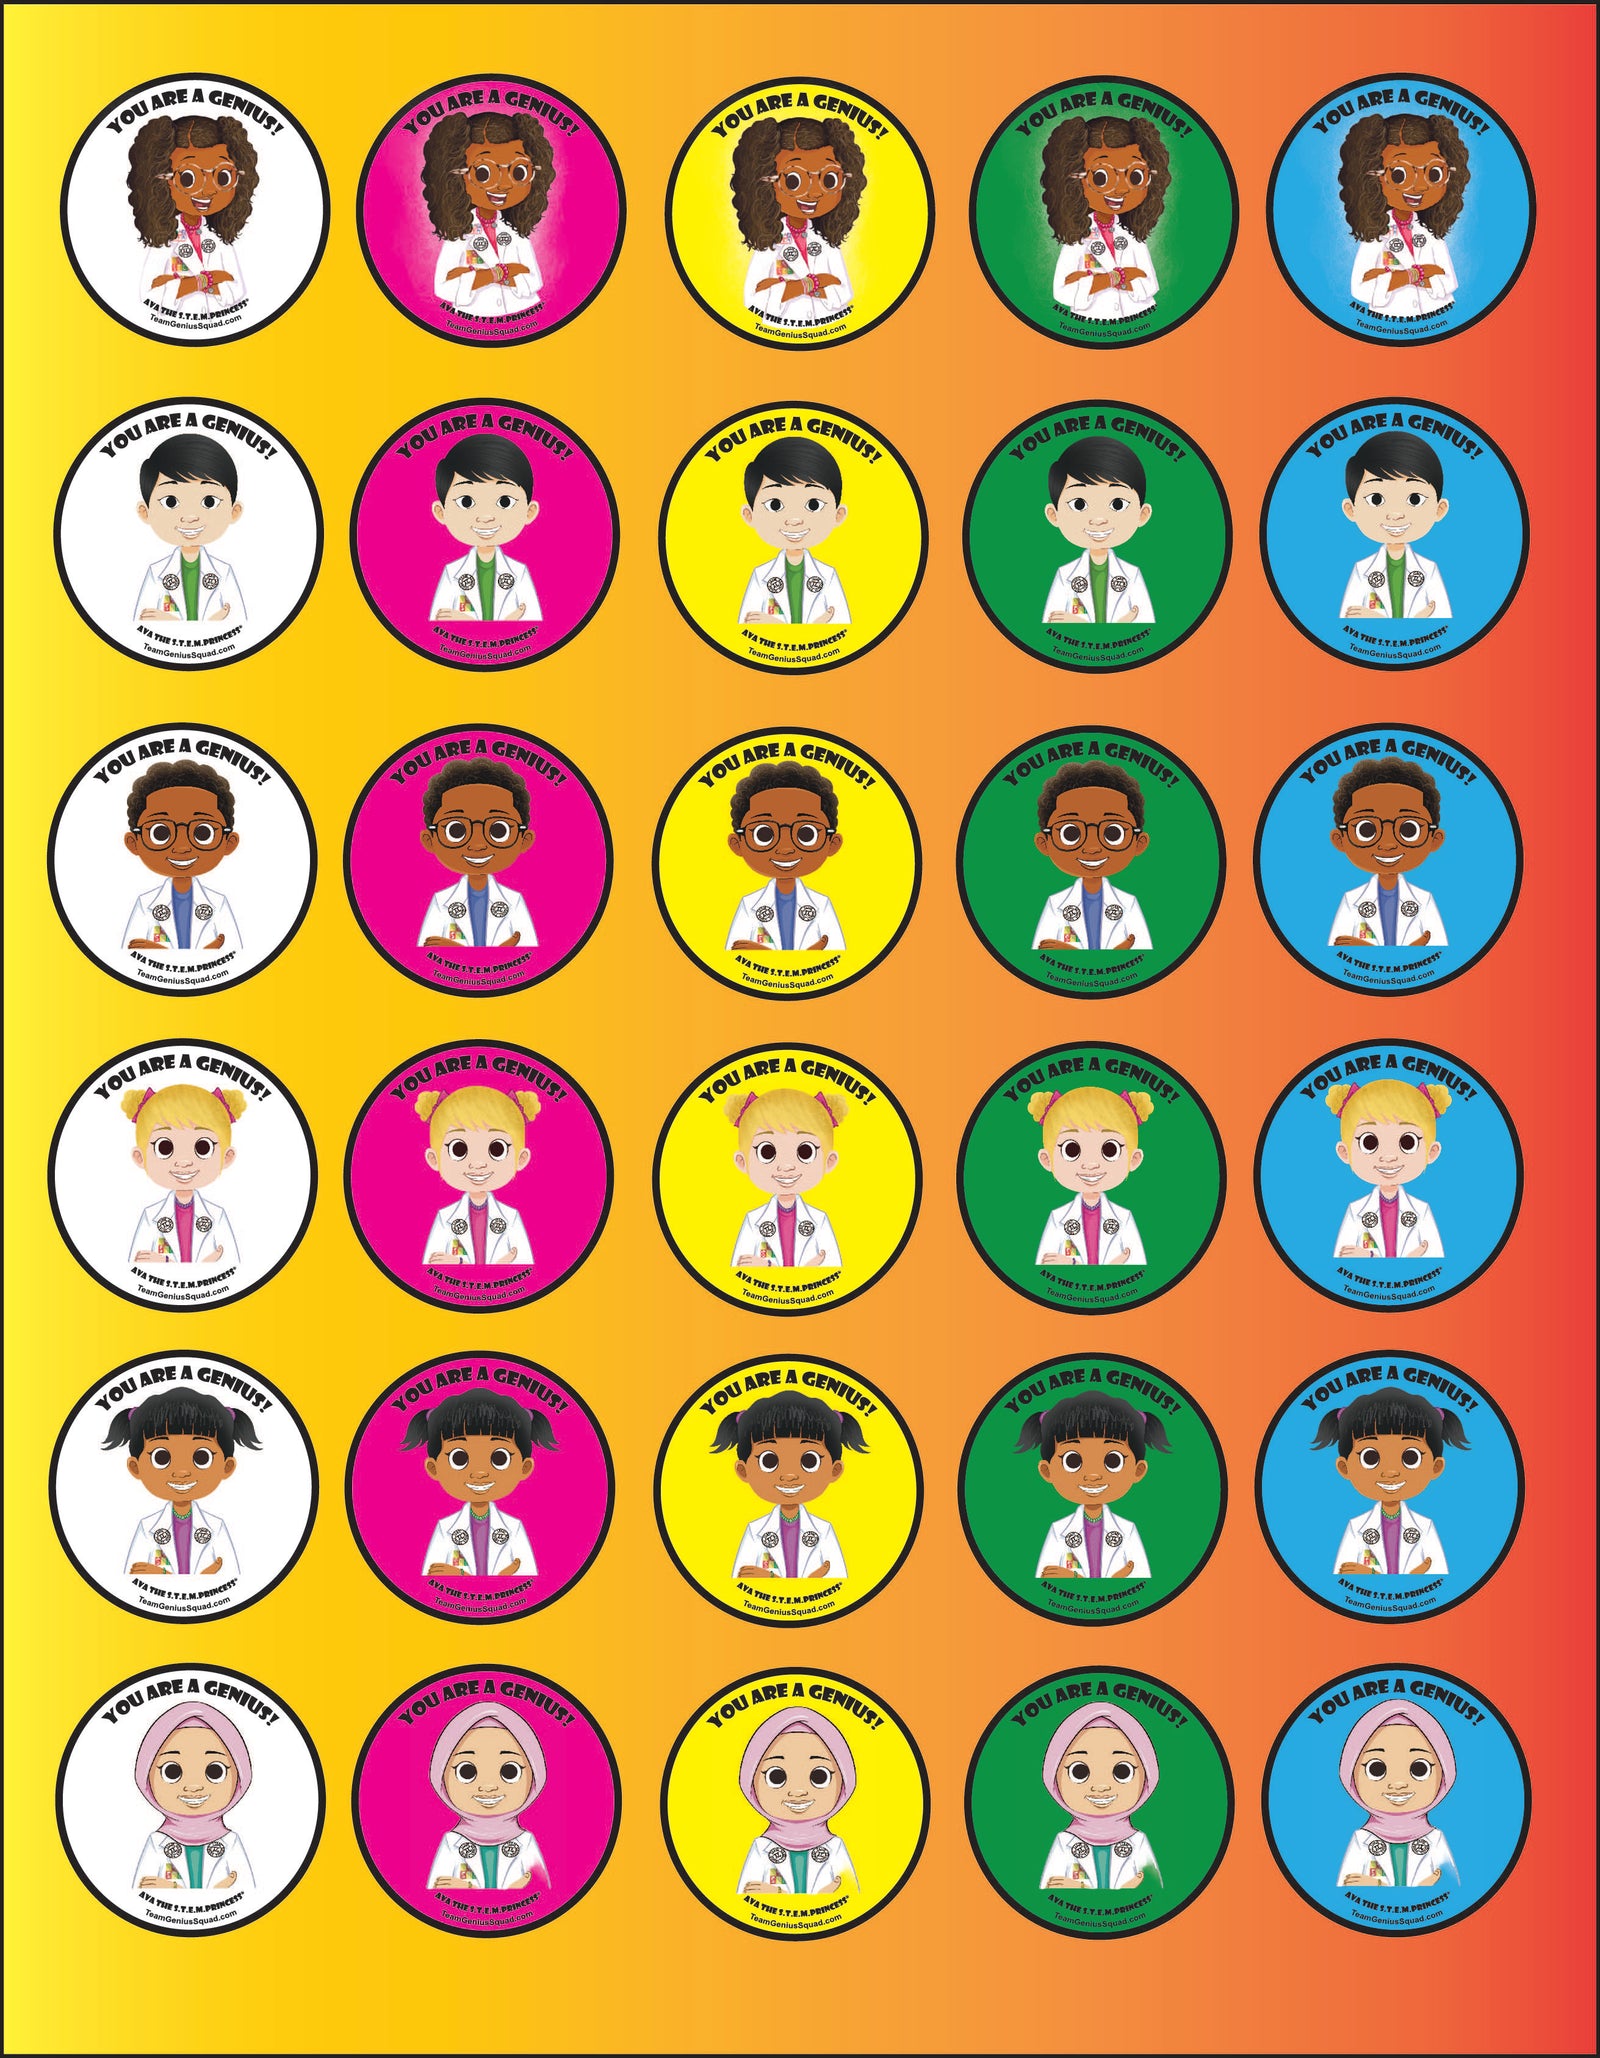 S.T.E.M. Encouragement Colorful Positivity and Diversity Sticker Sheets